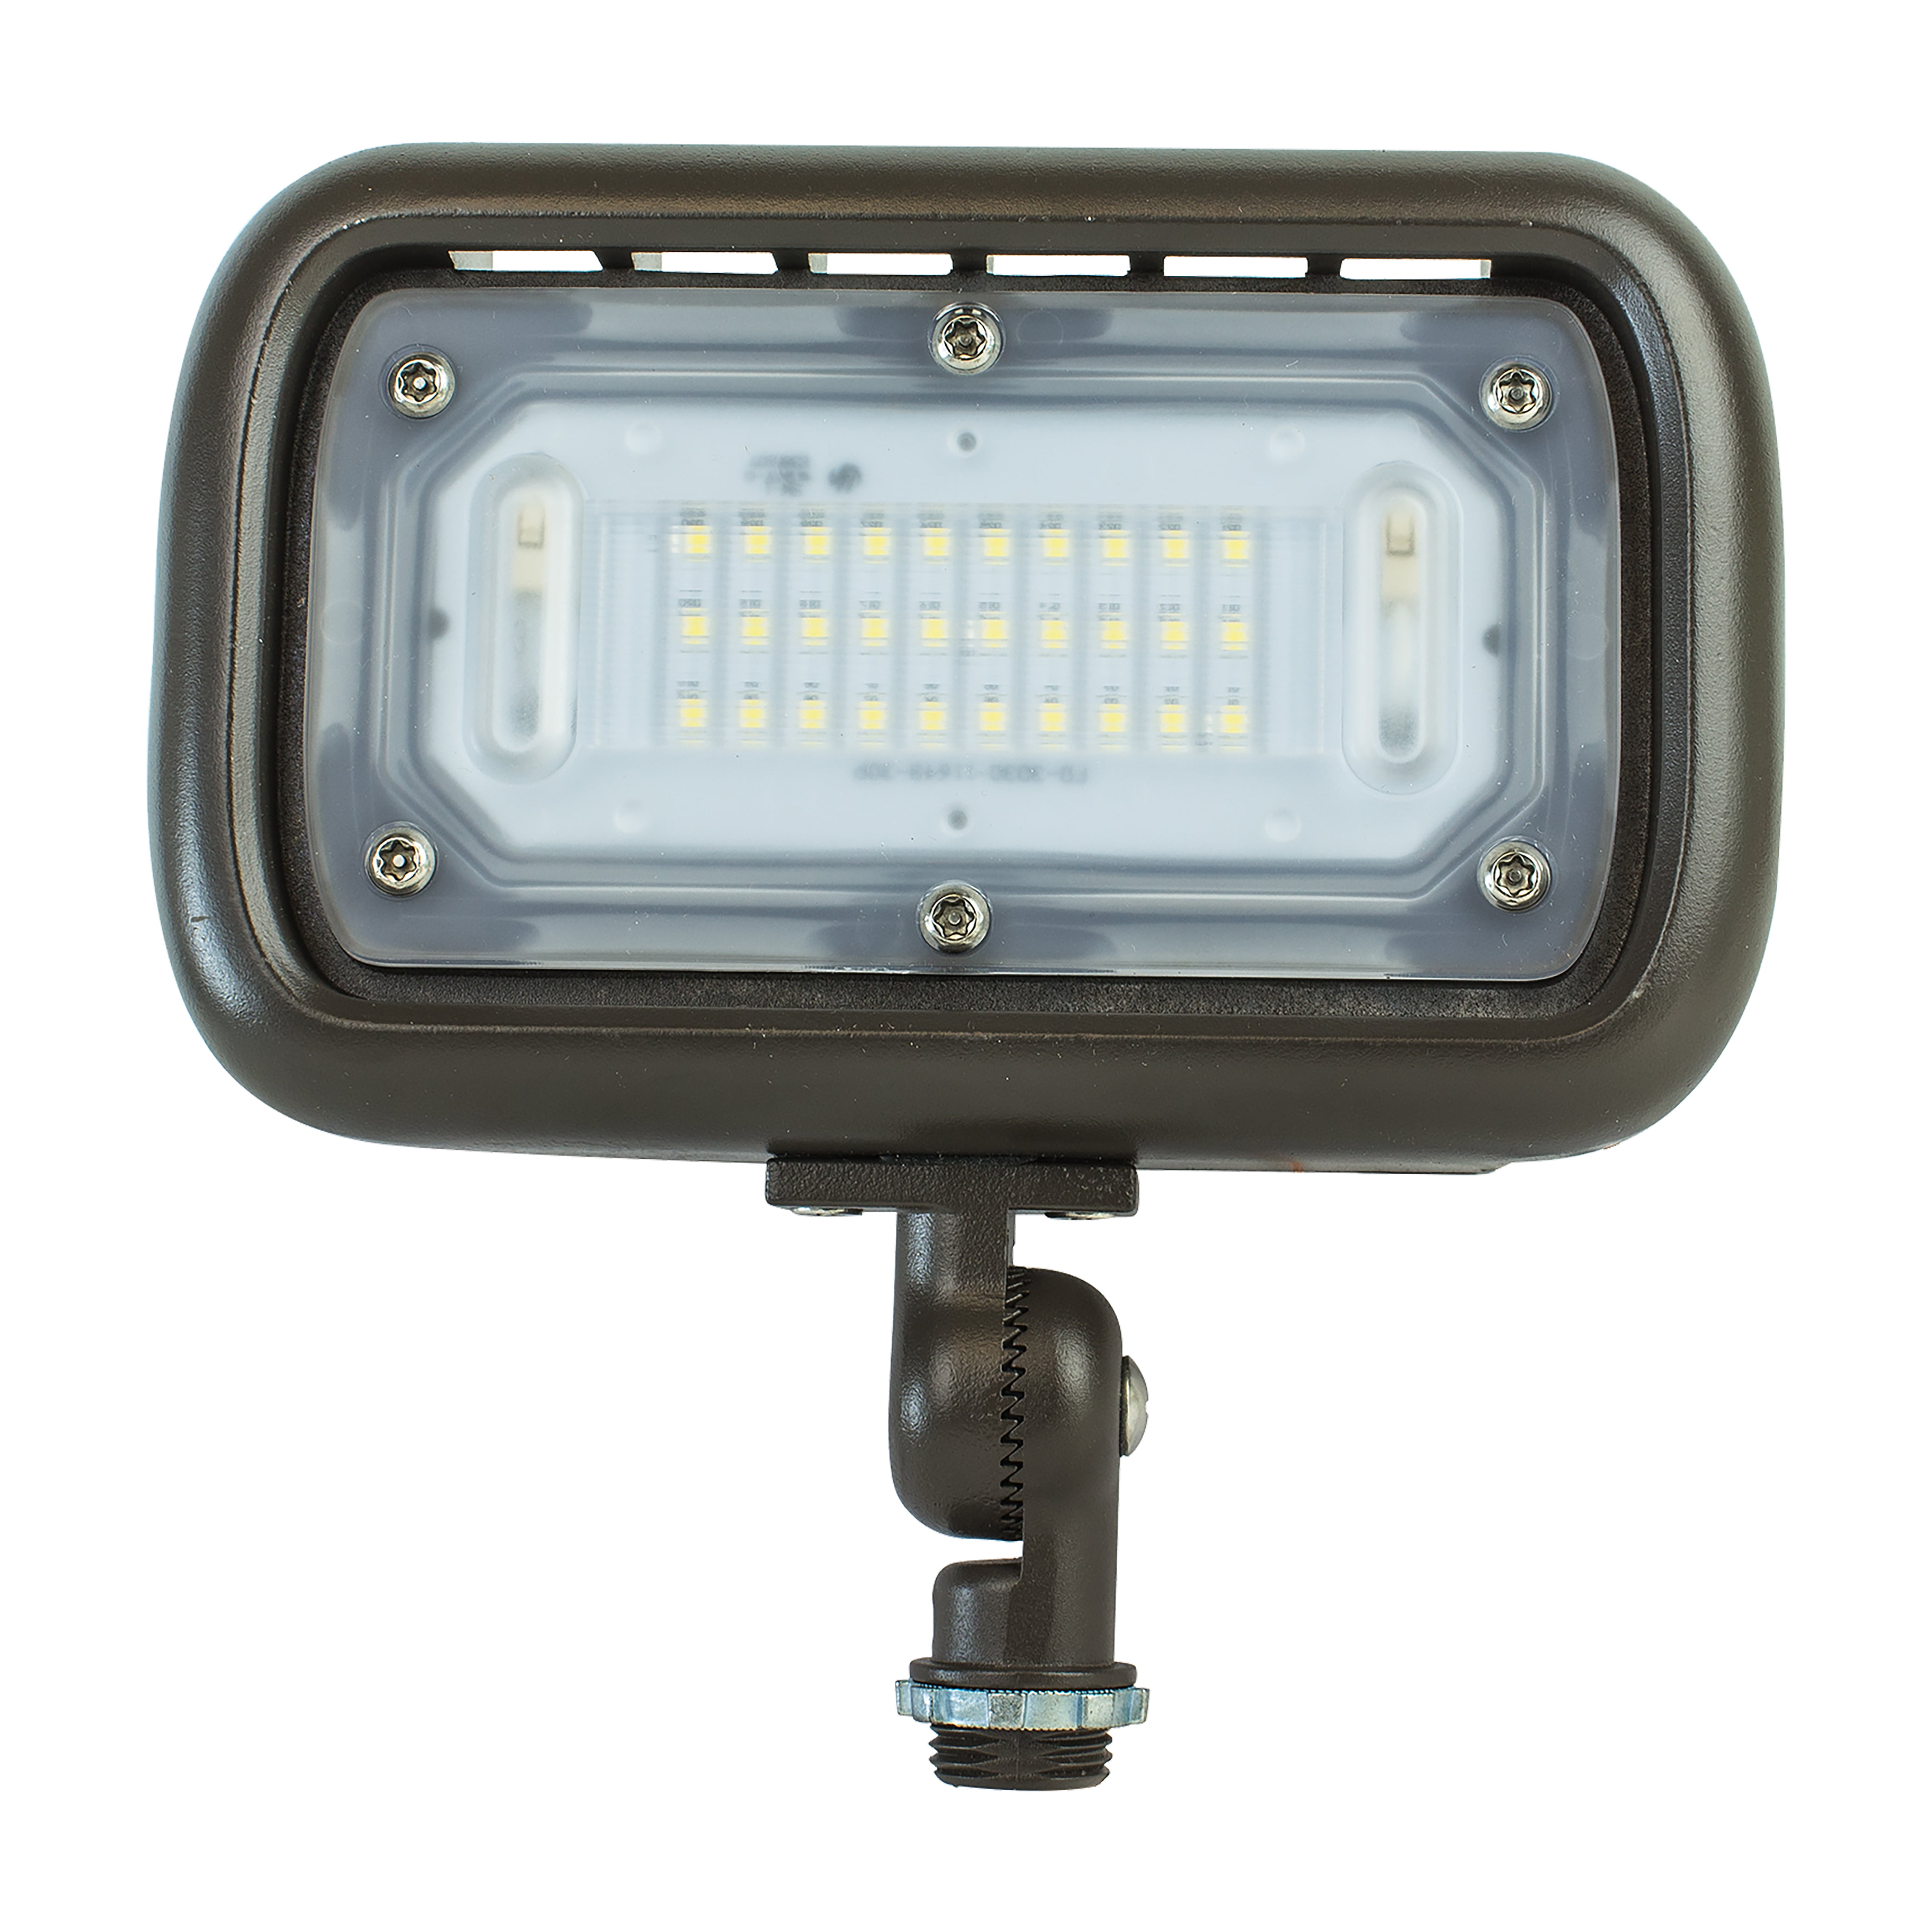 20W LED Floodlight Outdoor Yard Light Flood Cool White Lamp Plug-In 120VAC IP65